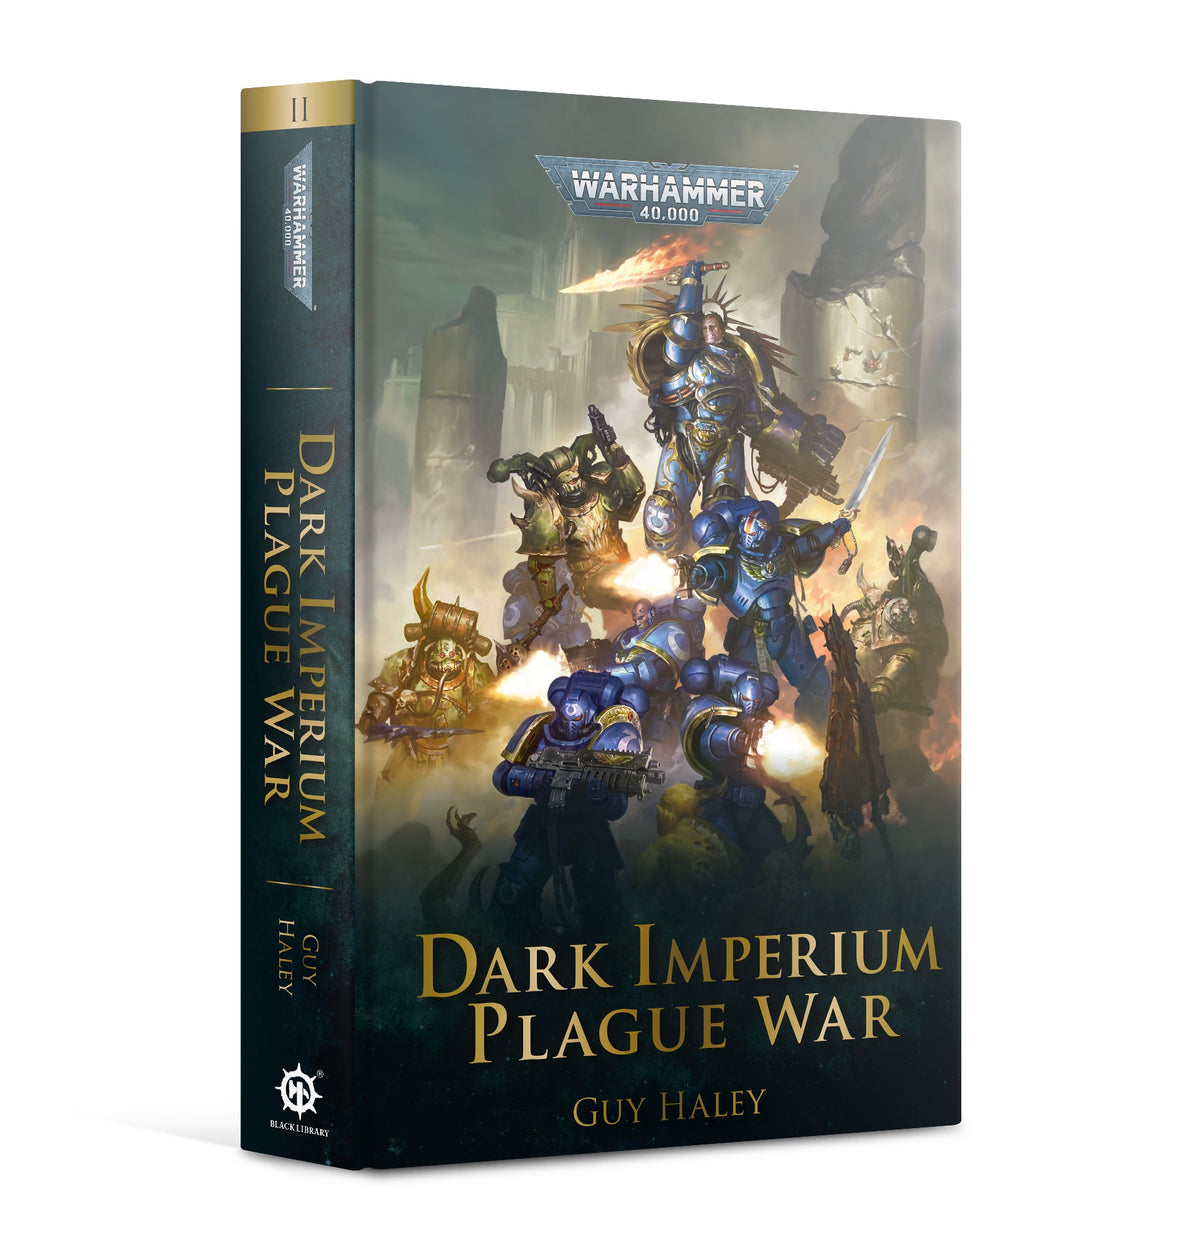 Dark Imperium: Plague War Redux (Novel HB)